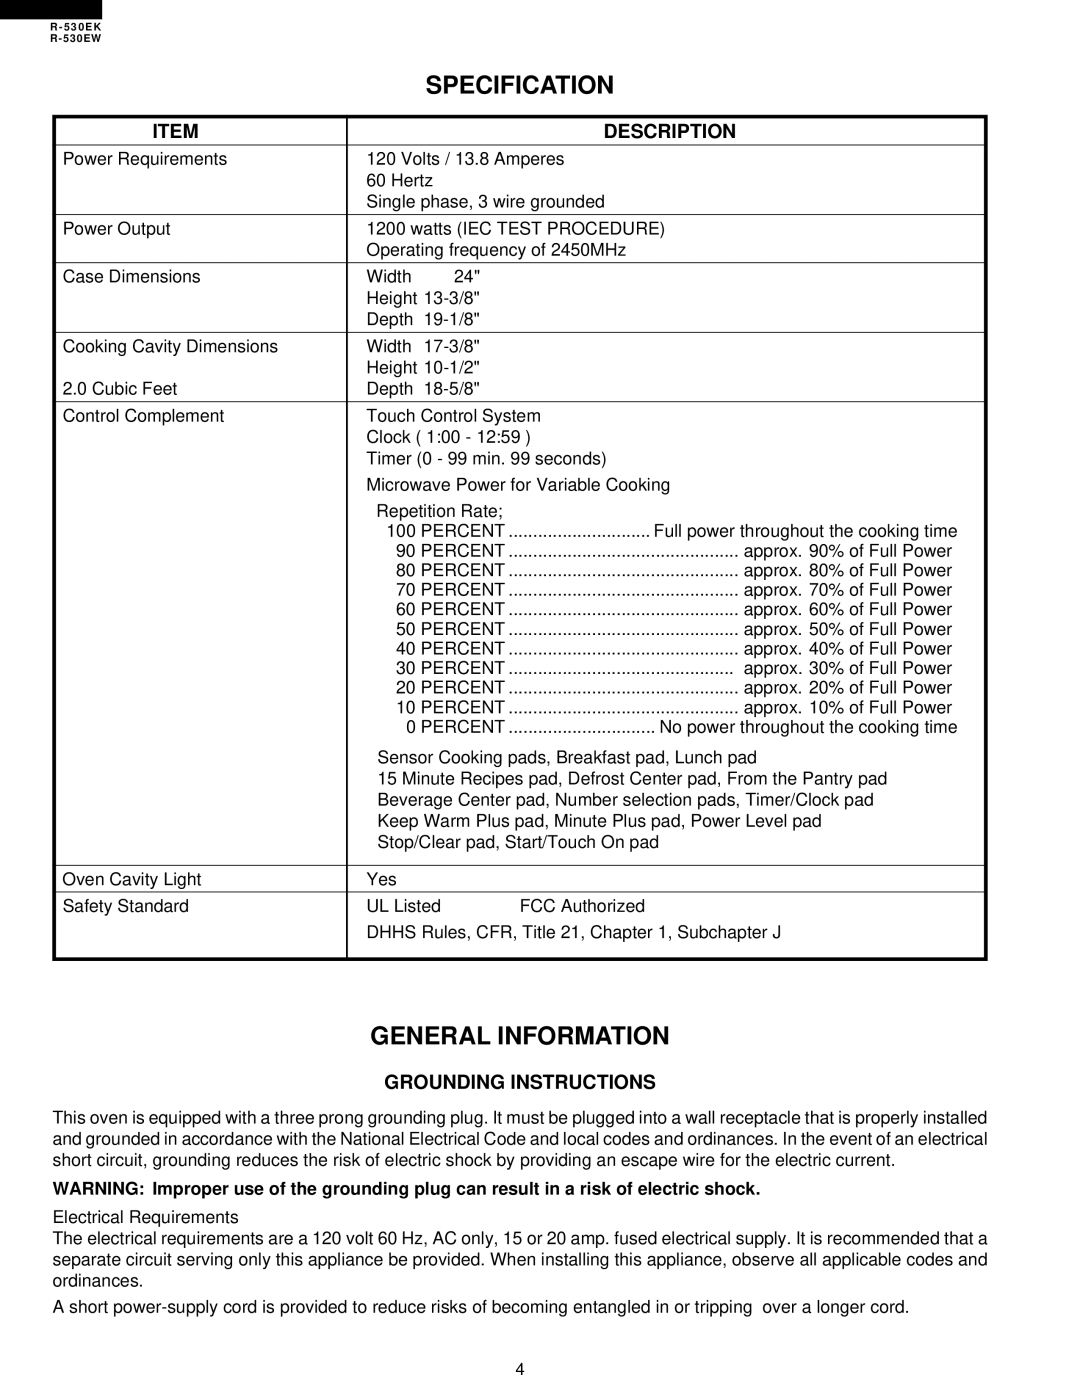 Sharp R-530EK service manual Specification, General Information, Description, Grounding Instructions 